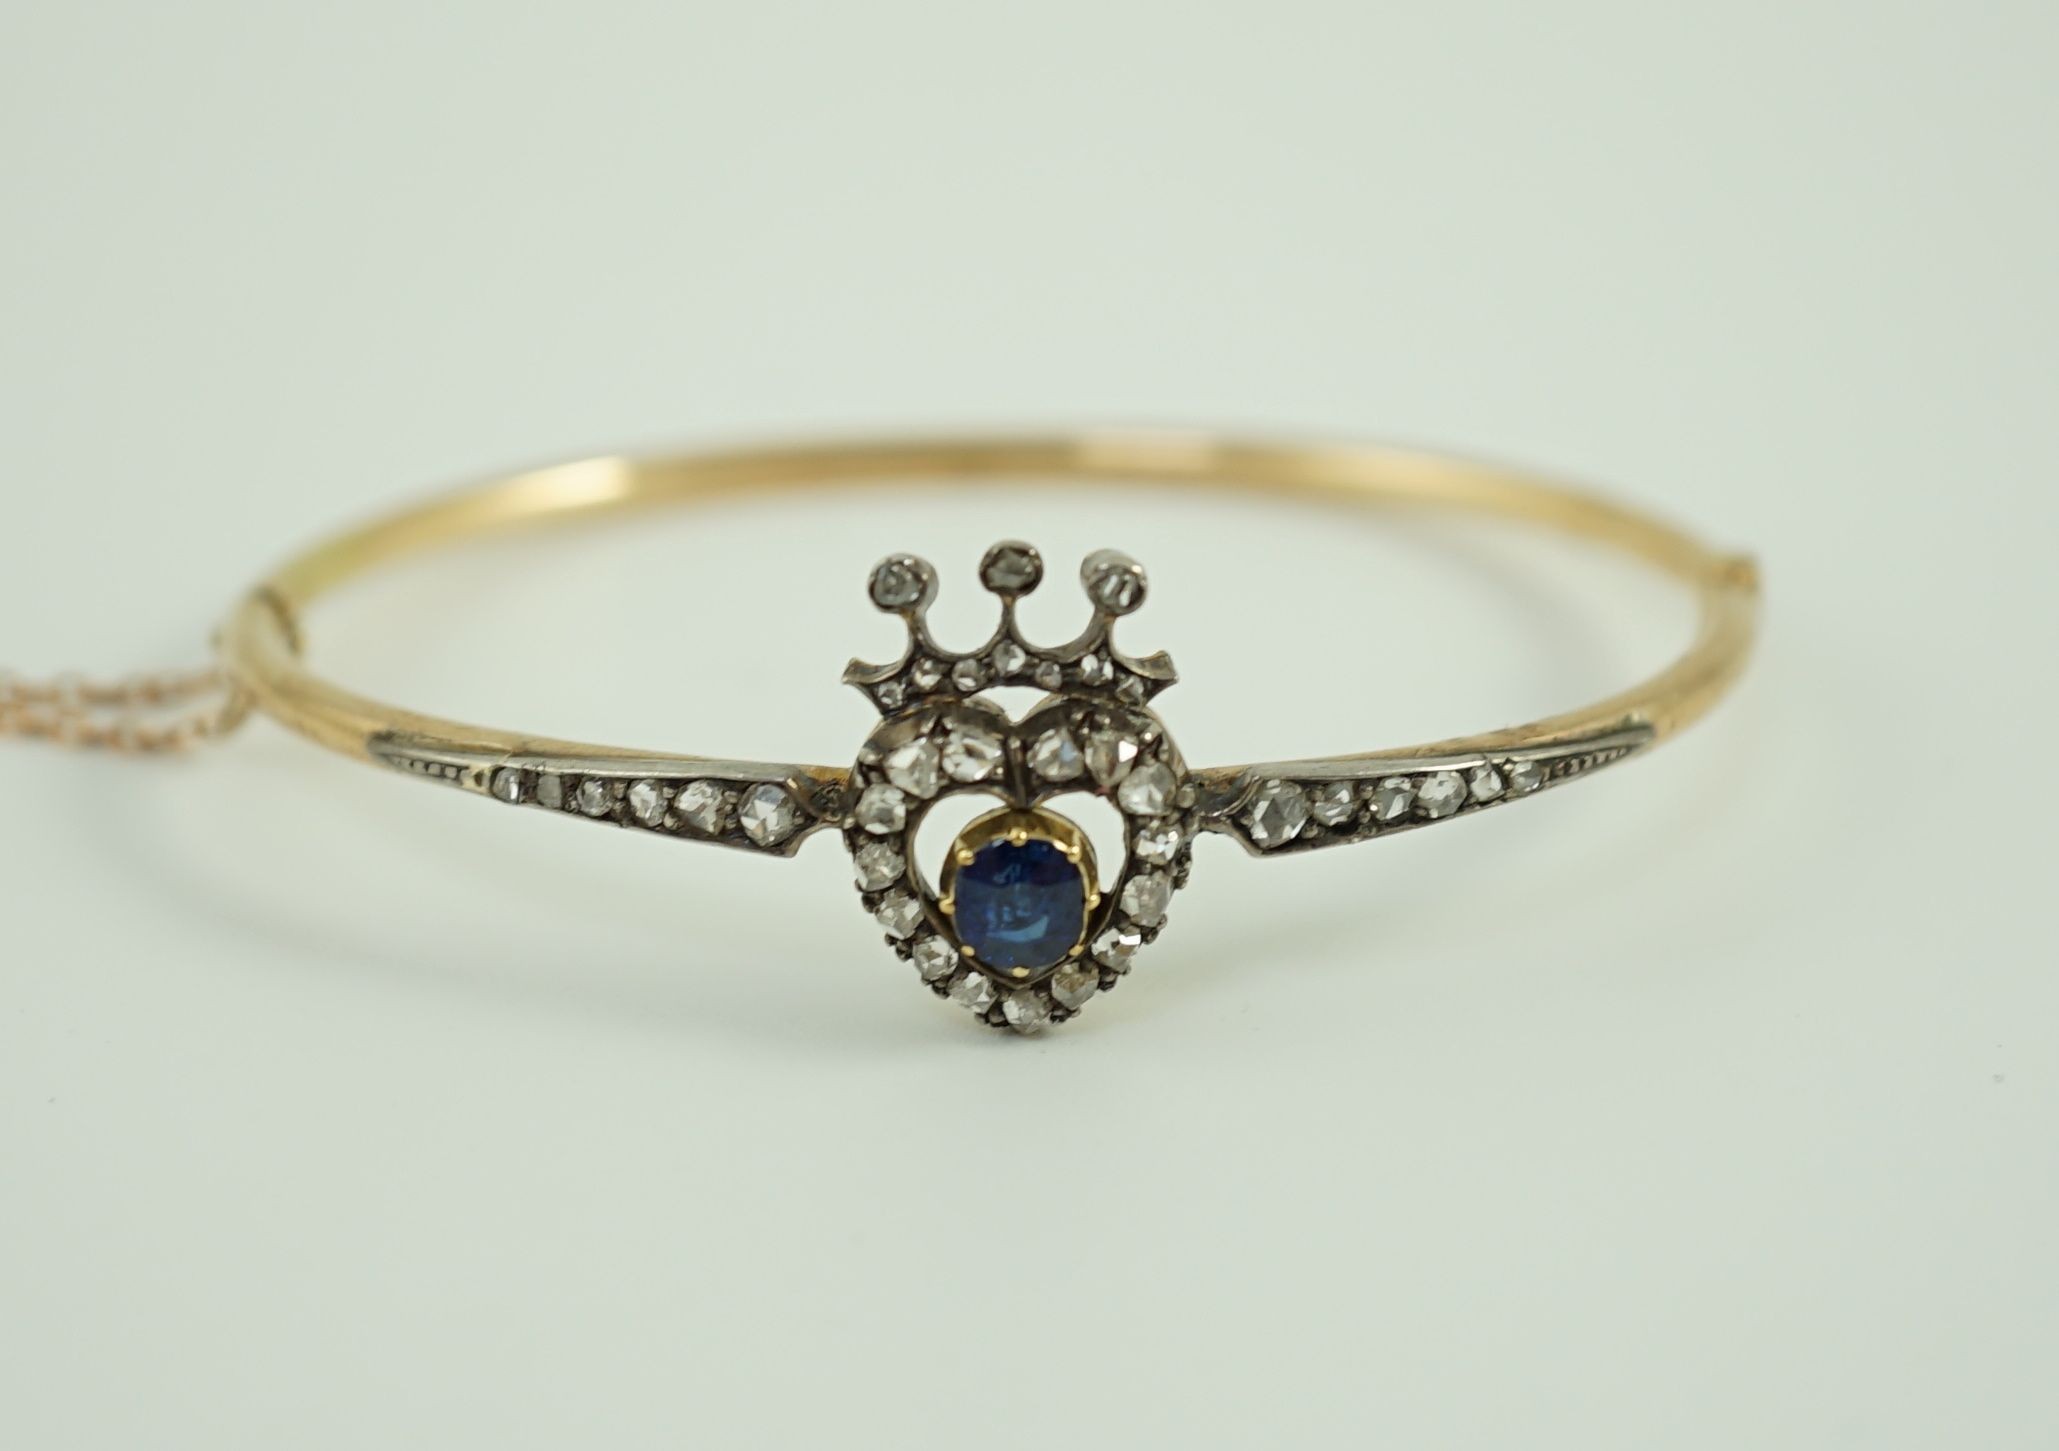 A 19th century gold, sapphire and rose cut diamond set hinged bangle